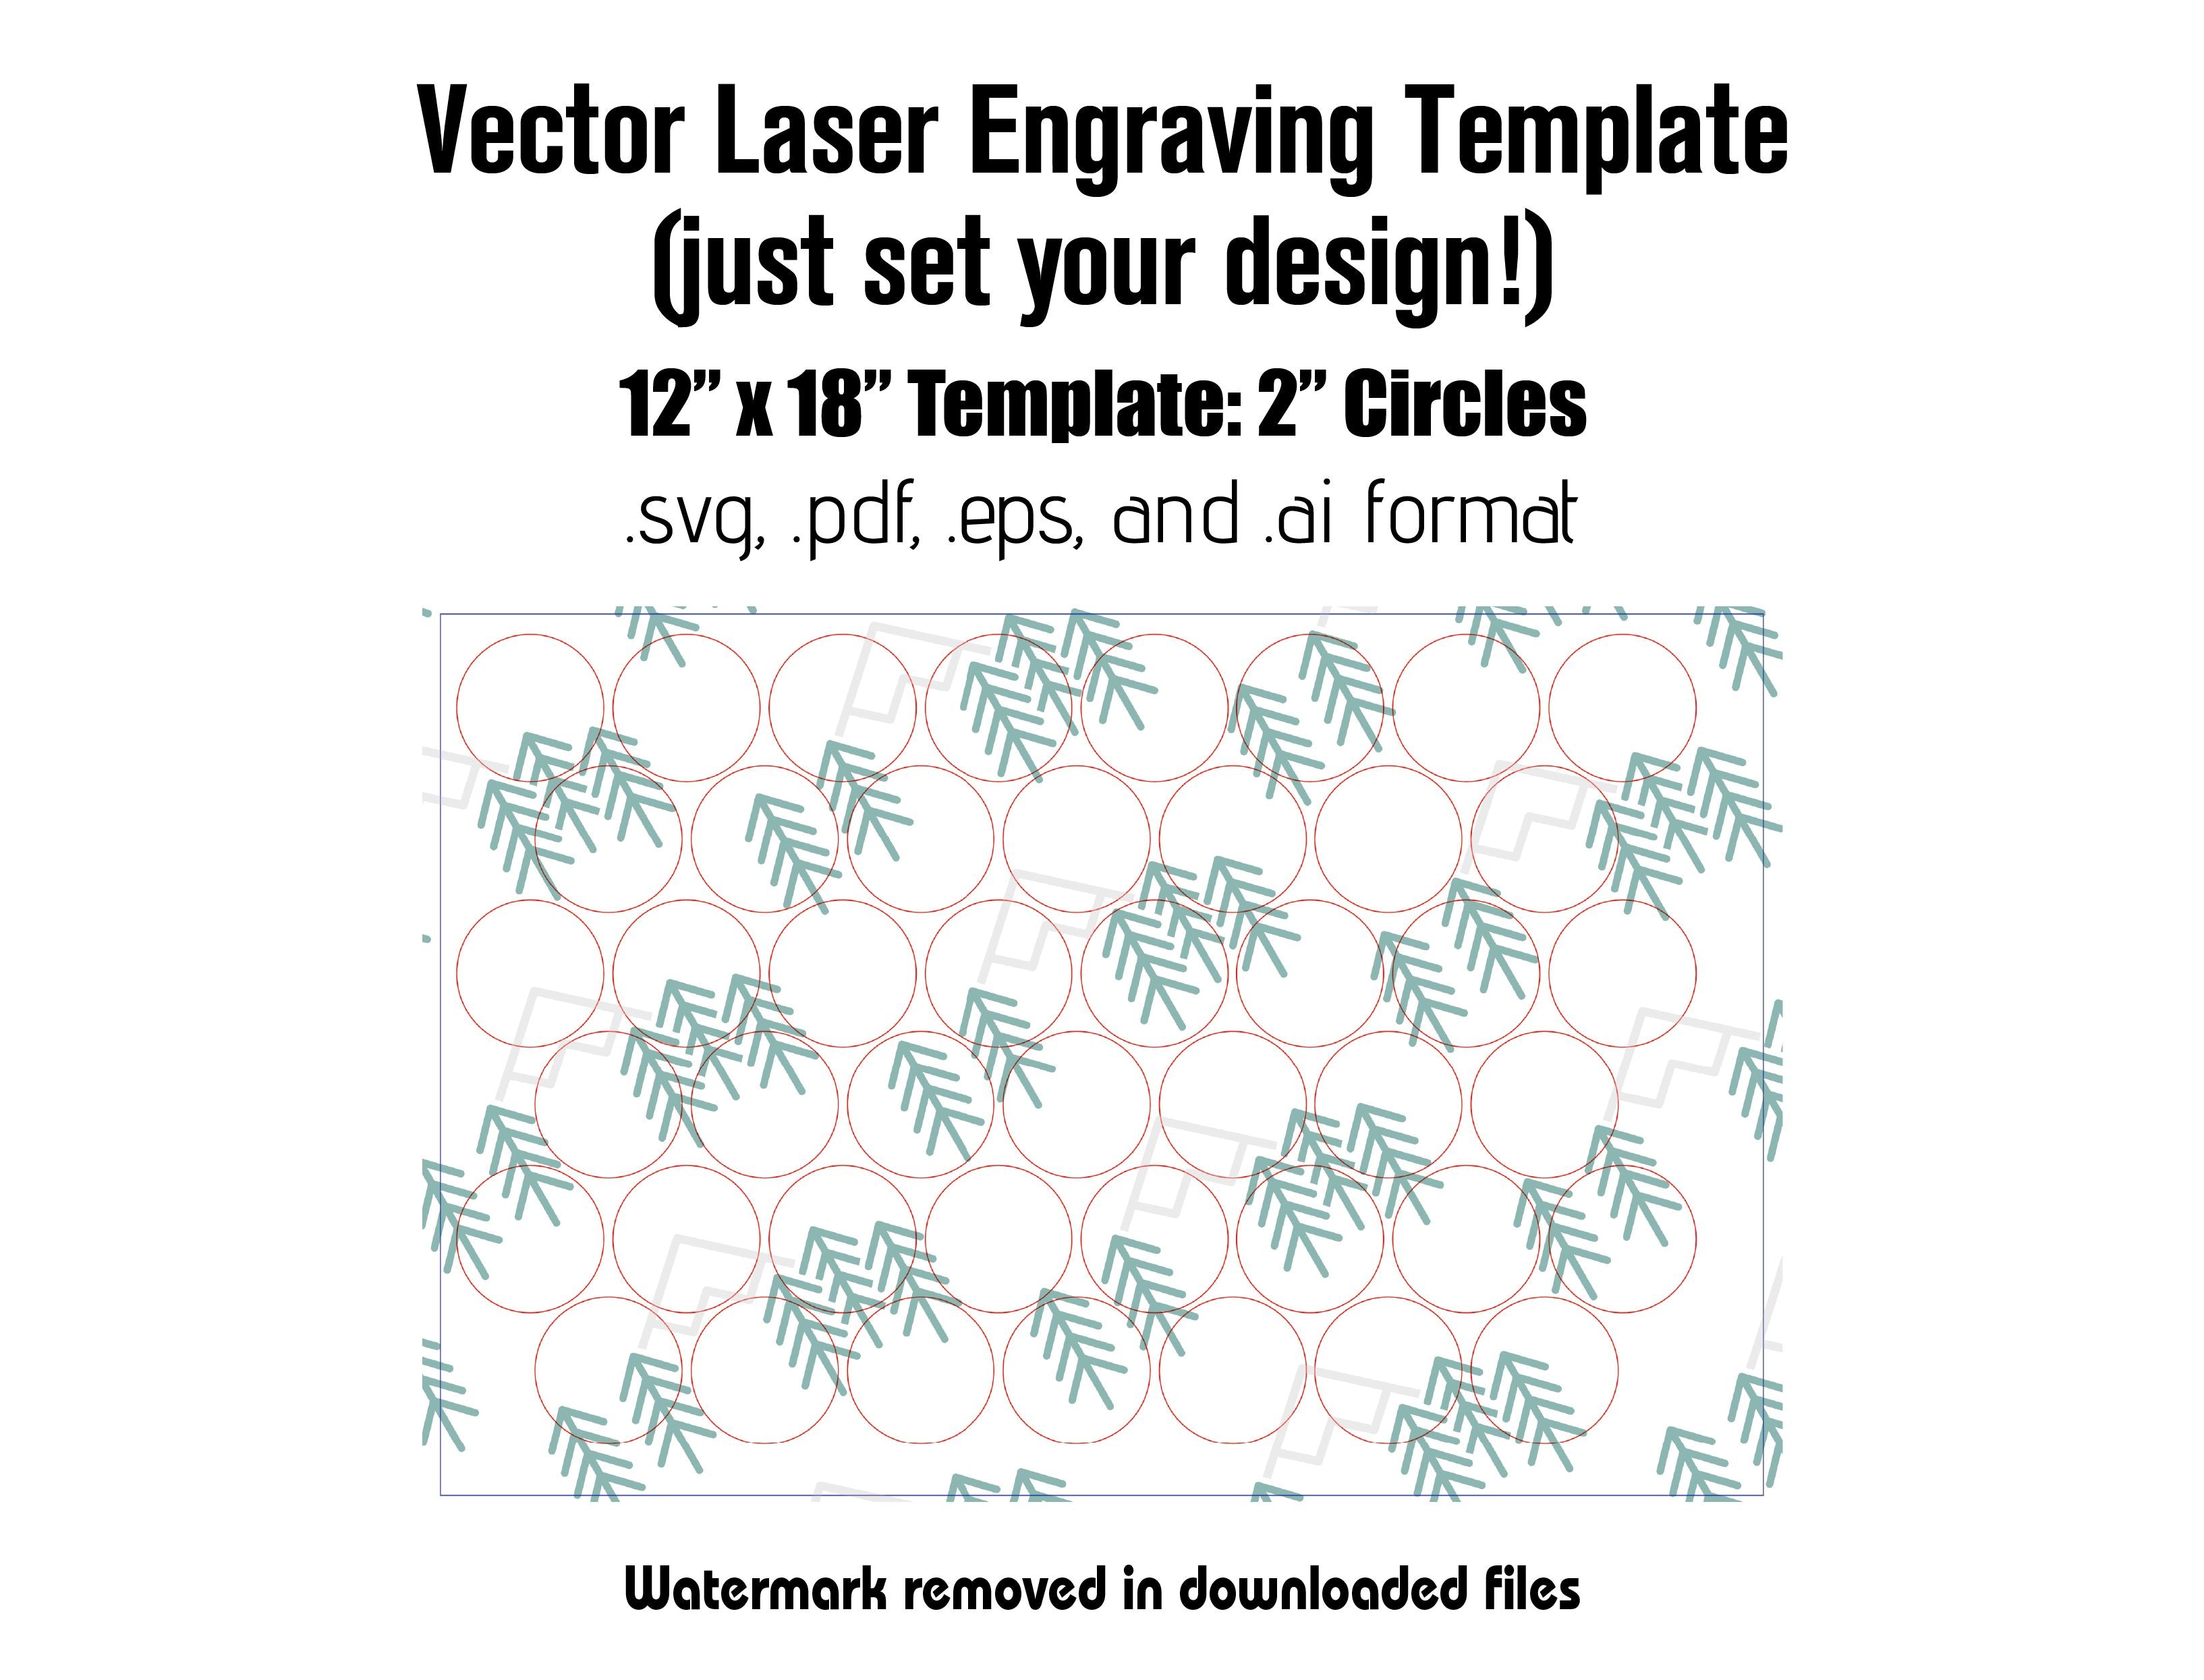 Digital Laser Cutting Template: 2" Circles - 12" x 18" Sheet Size Digital Laser Engraving Files Craftworks NW 